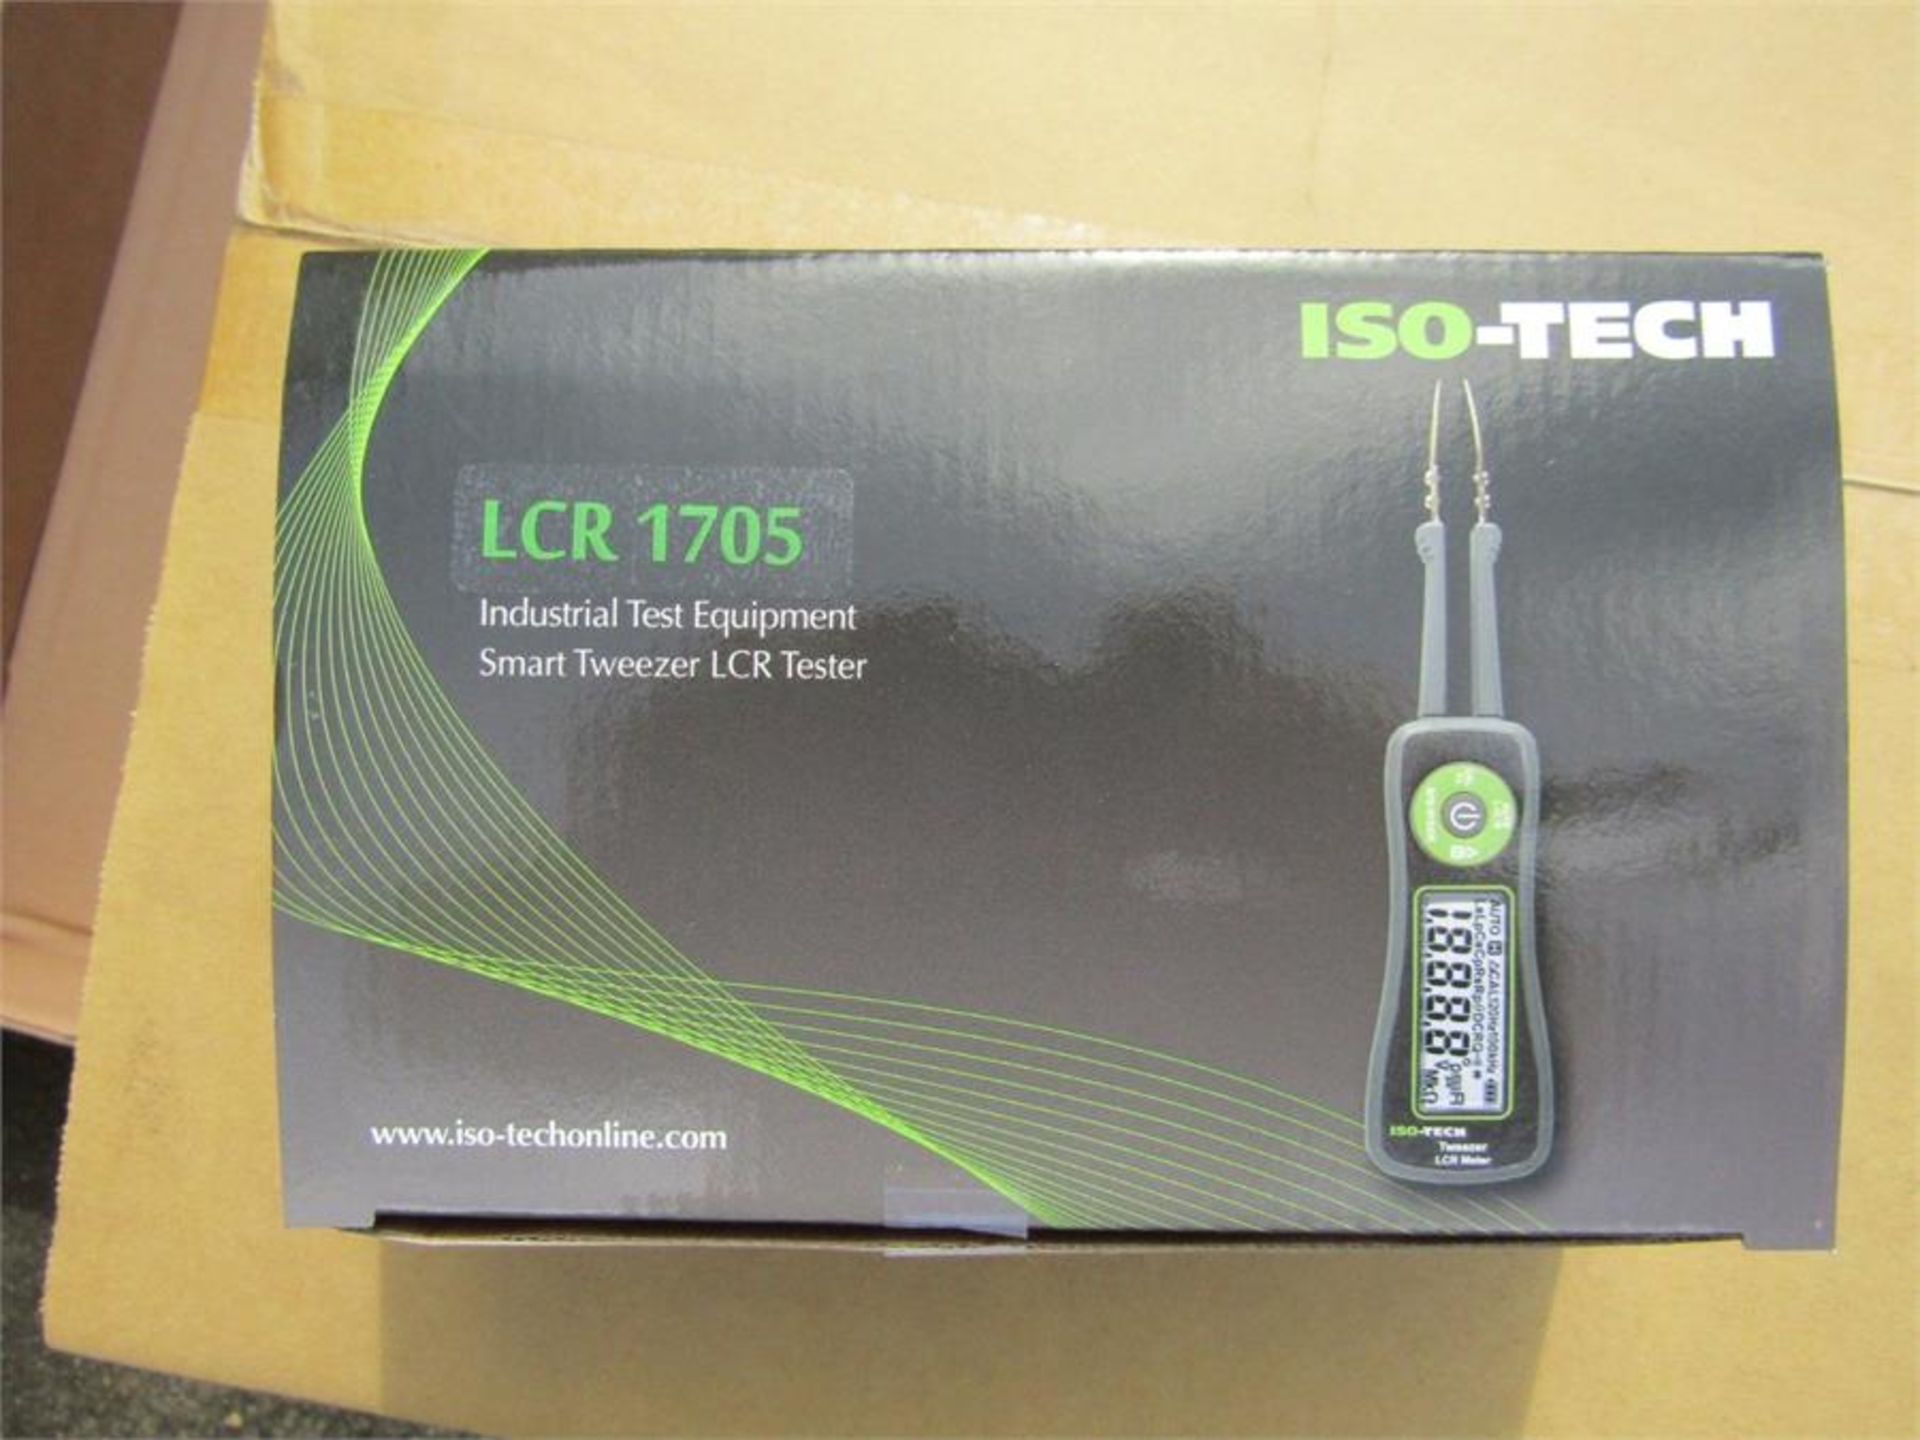 NEW ISO-TECH Smart Tweezer LCR Tester LCR1705 T&M/J11 8659824 - Image 3 of 4